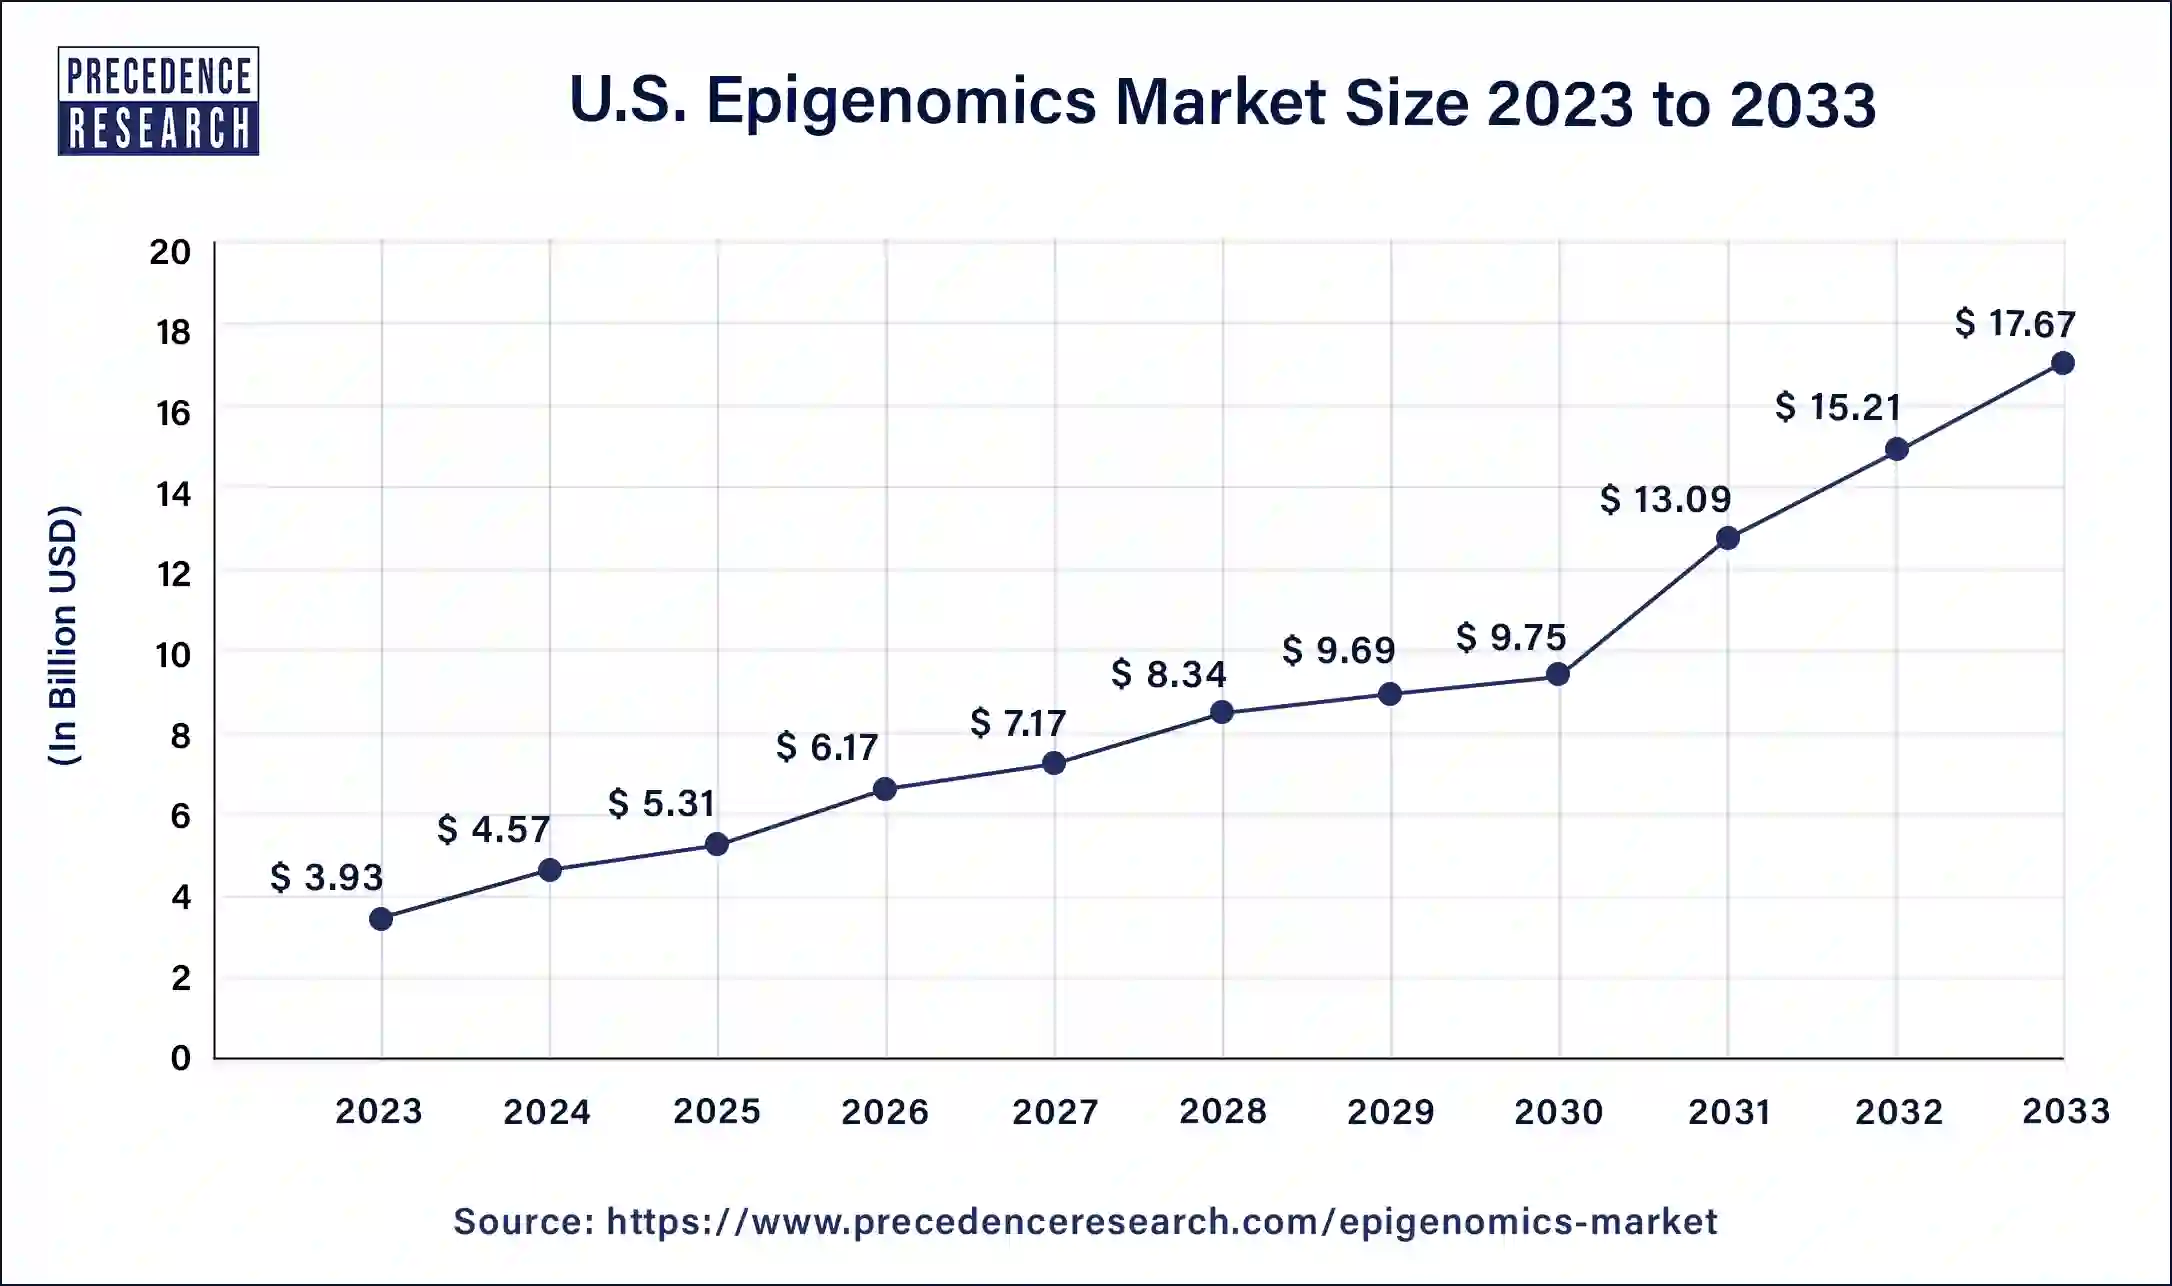 U.S. Epigenomics Market Size 2024 to 2033